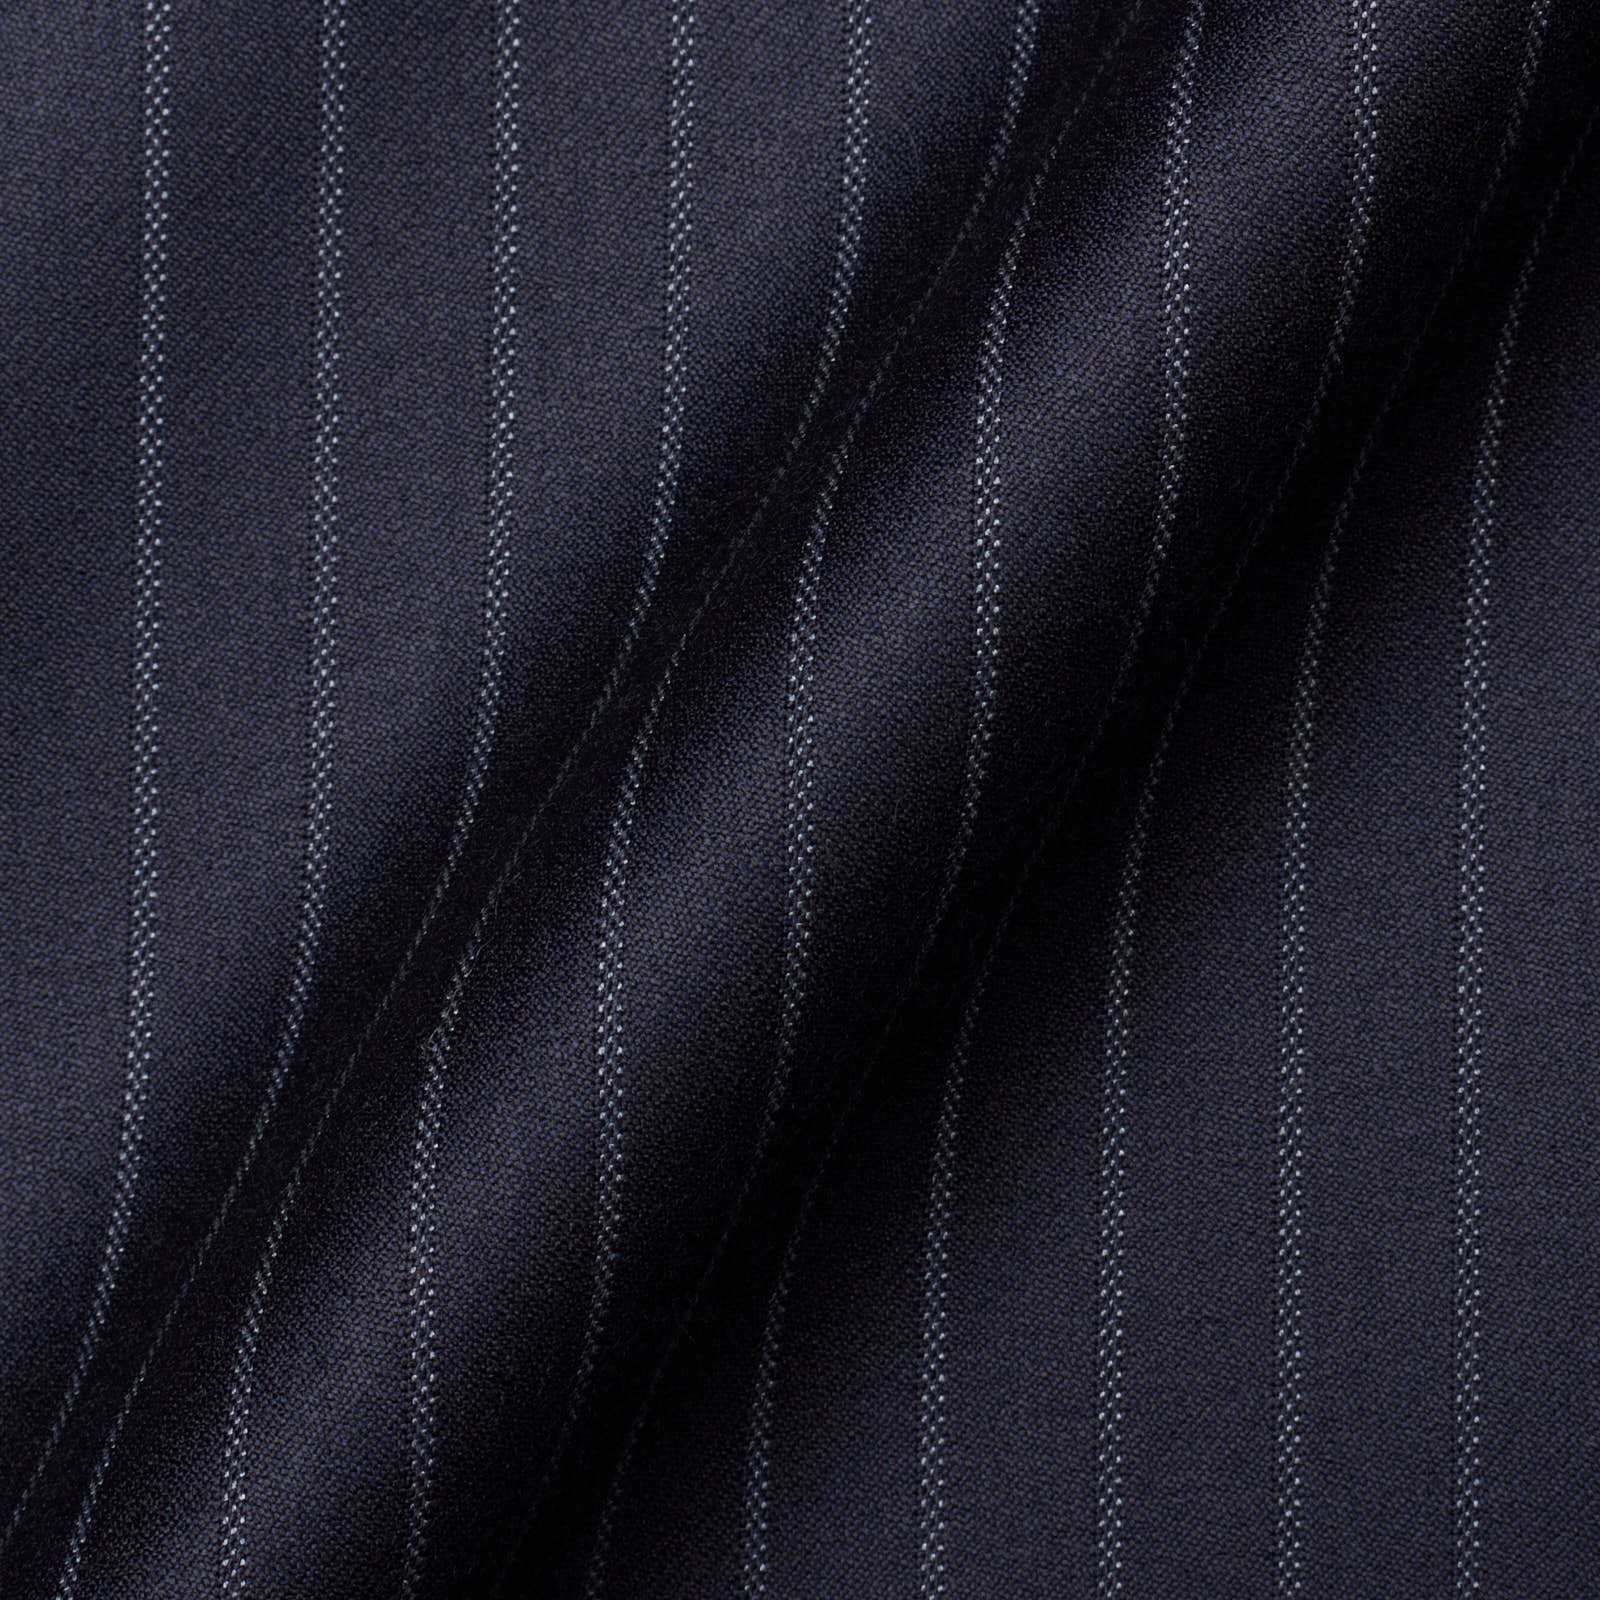 SARTORIA PARTENOPEA Handmade Navy Blue Super 150's Suit EU 56 NEW US 46